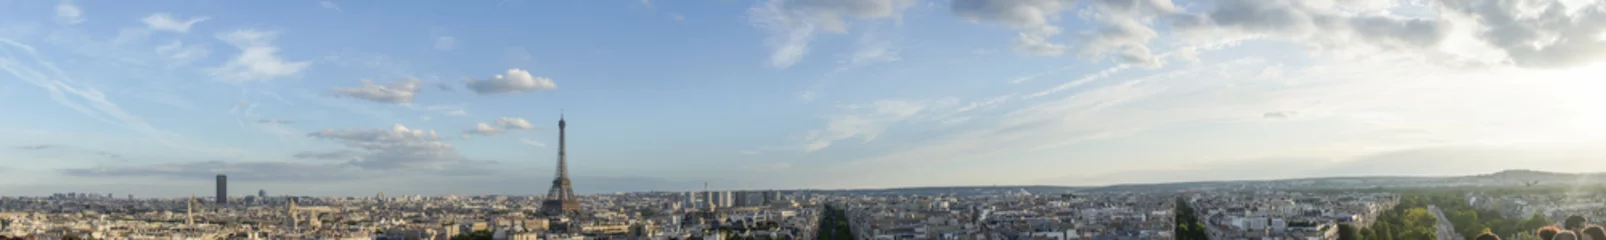 Fototapete Paris Pariser Panoramalandschaft